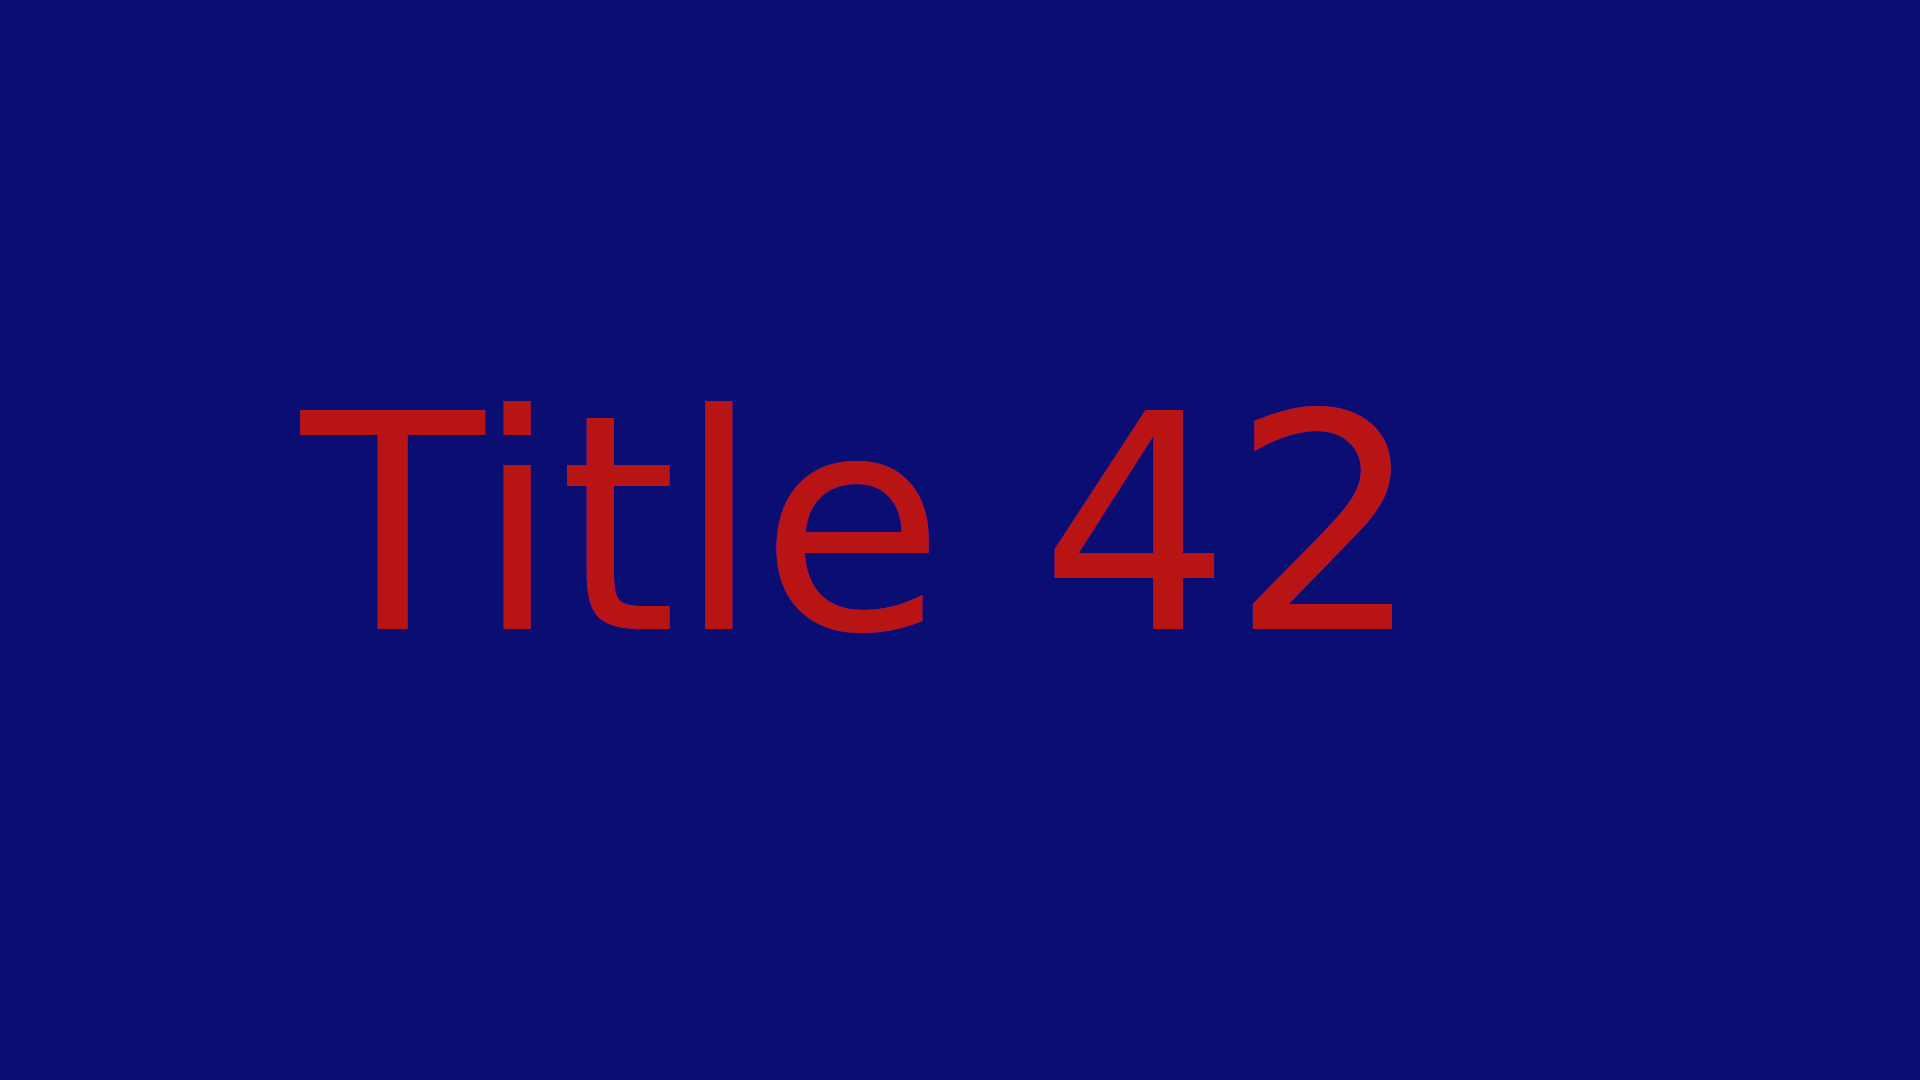 Title 42